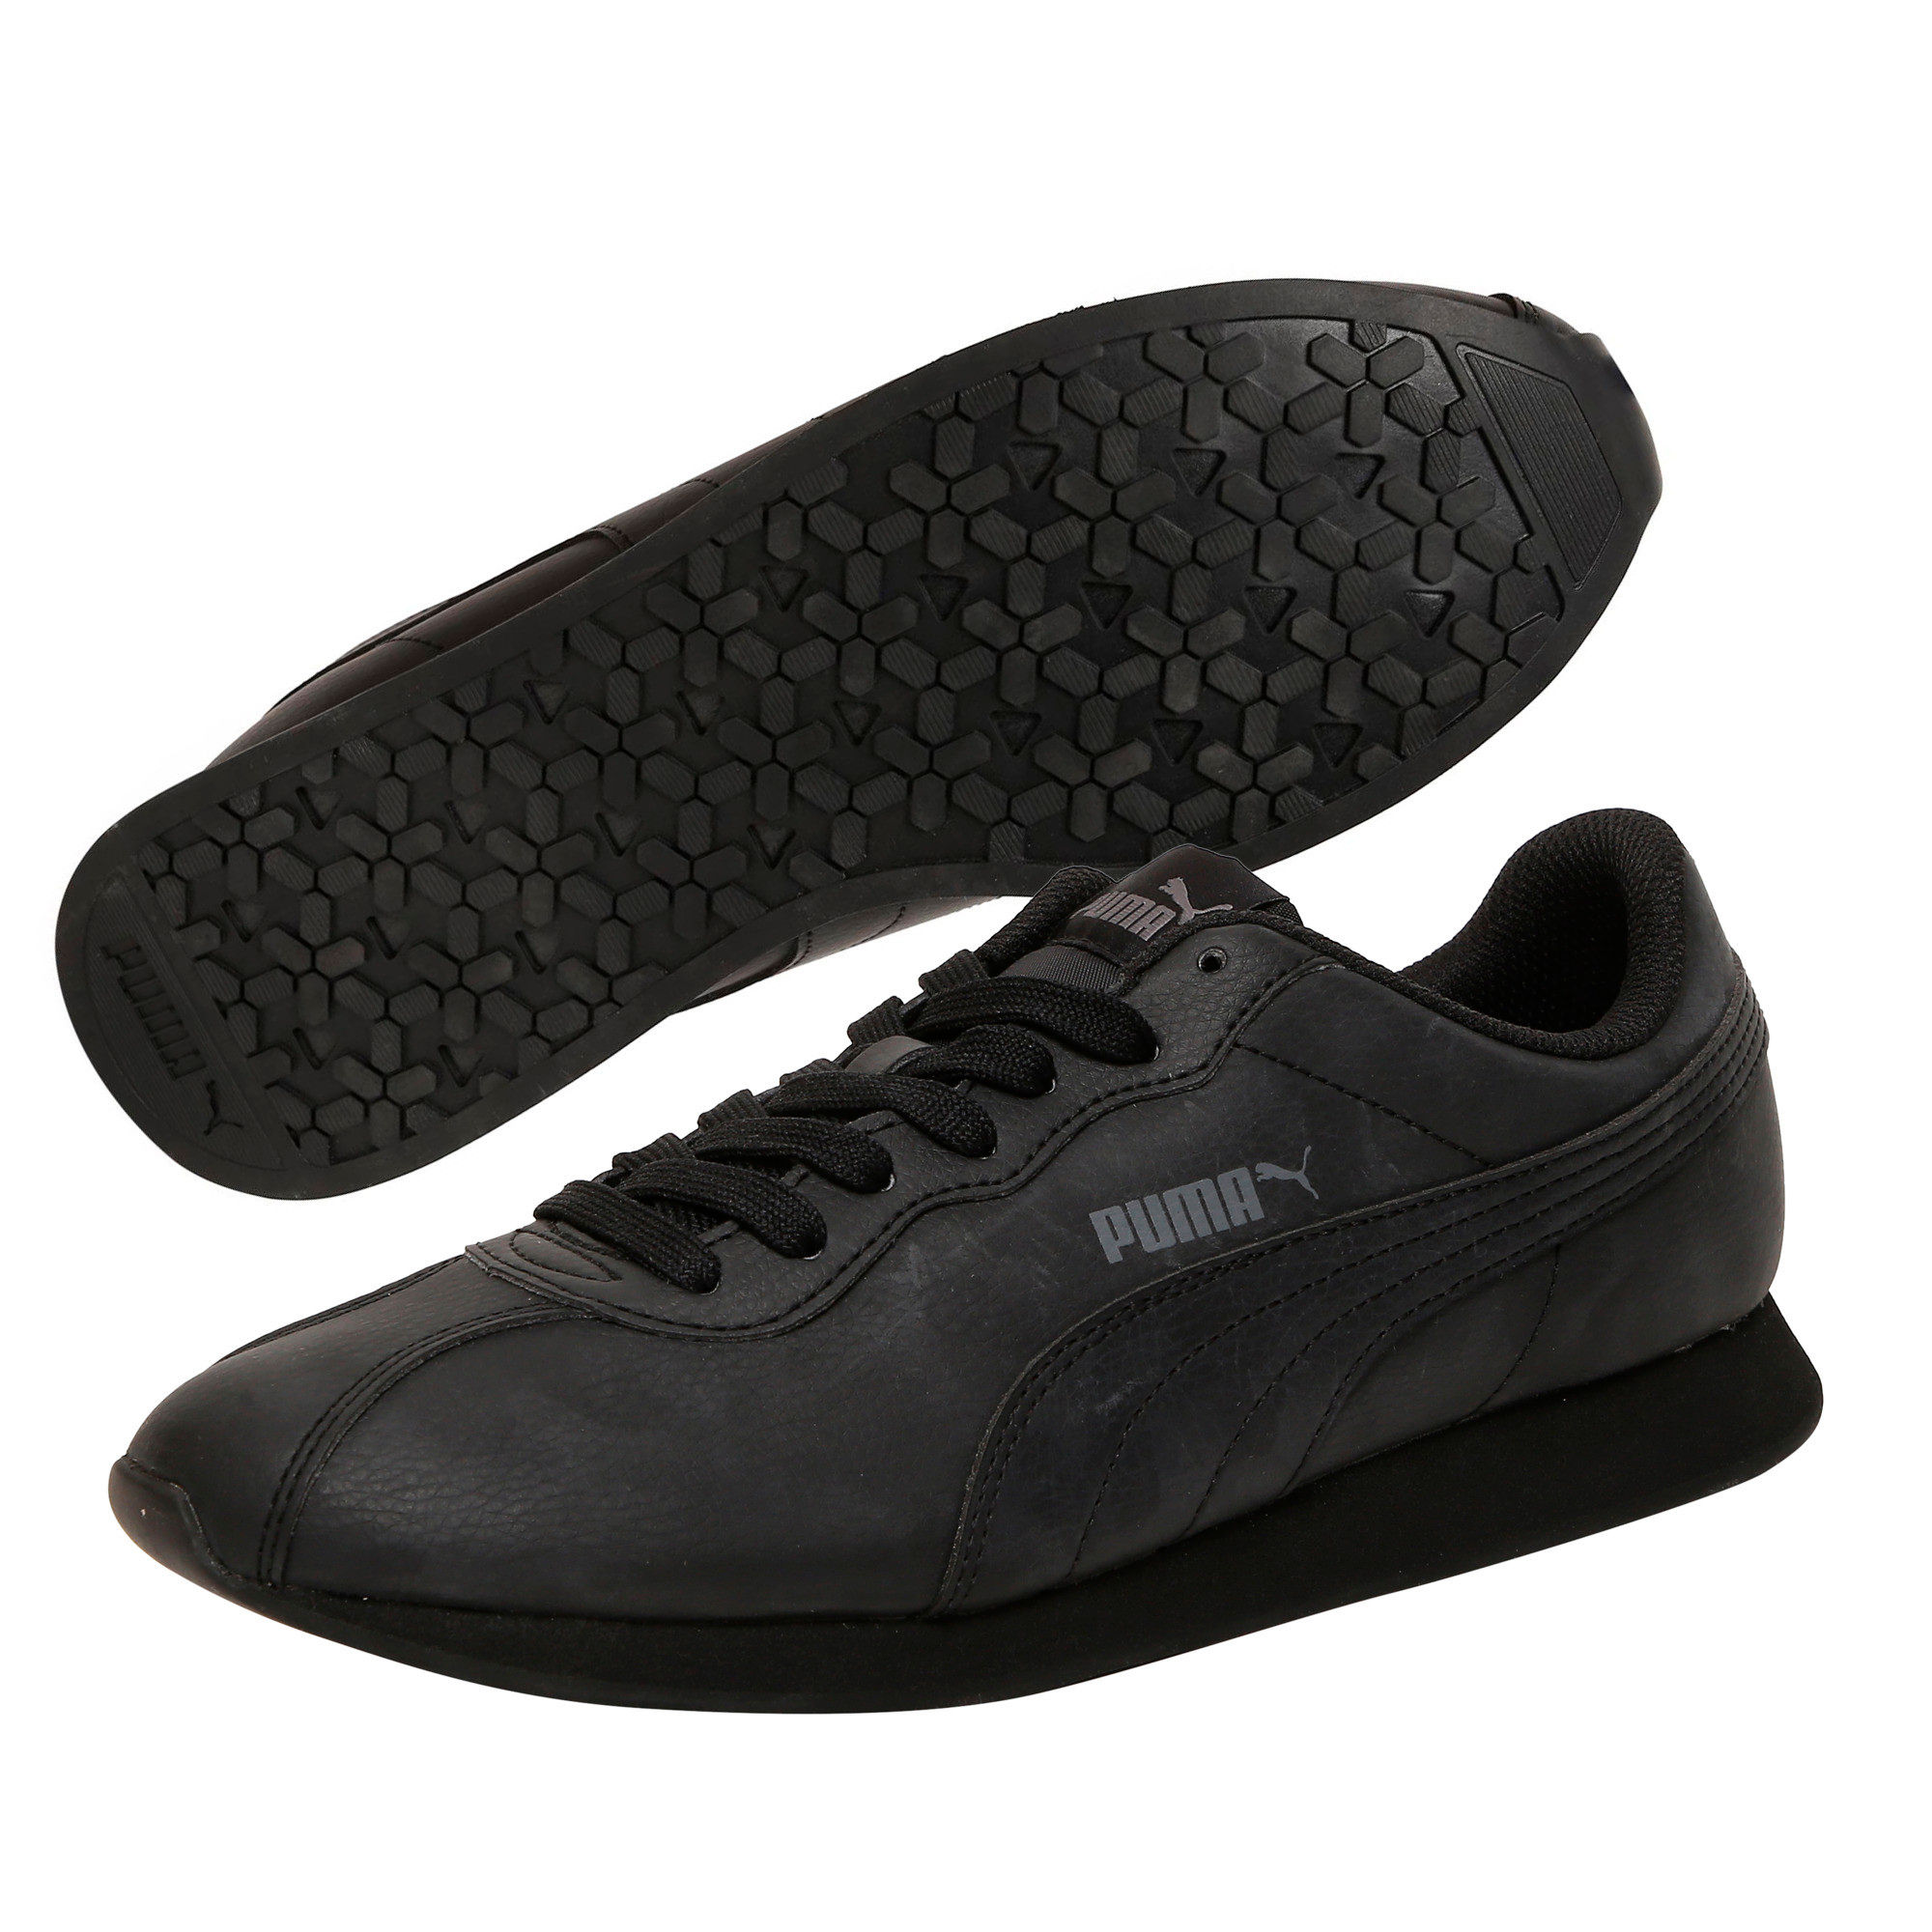 Puma Turin 3 White Black Men Unisex Casual Lifestyle Shoes Sneakers  383037-06 | eBay